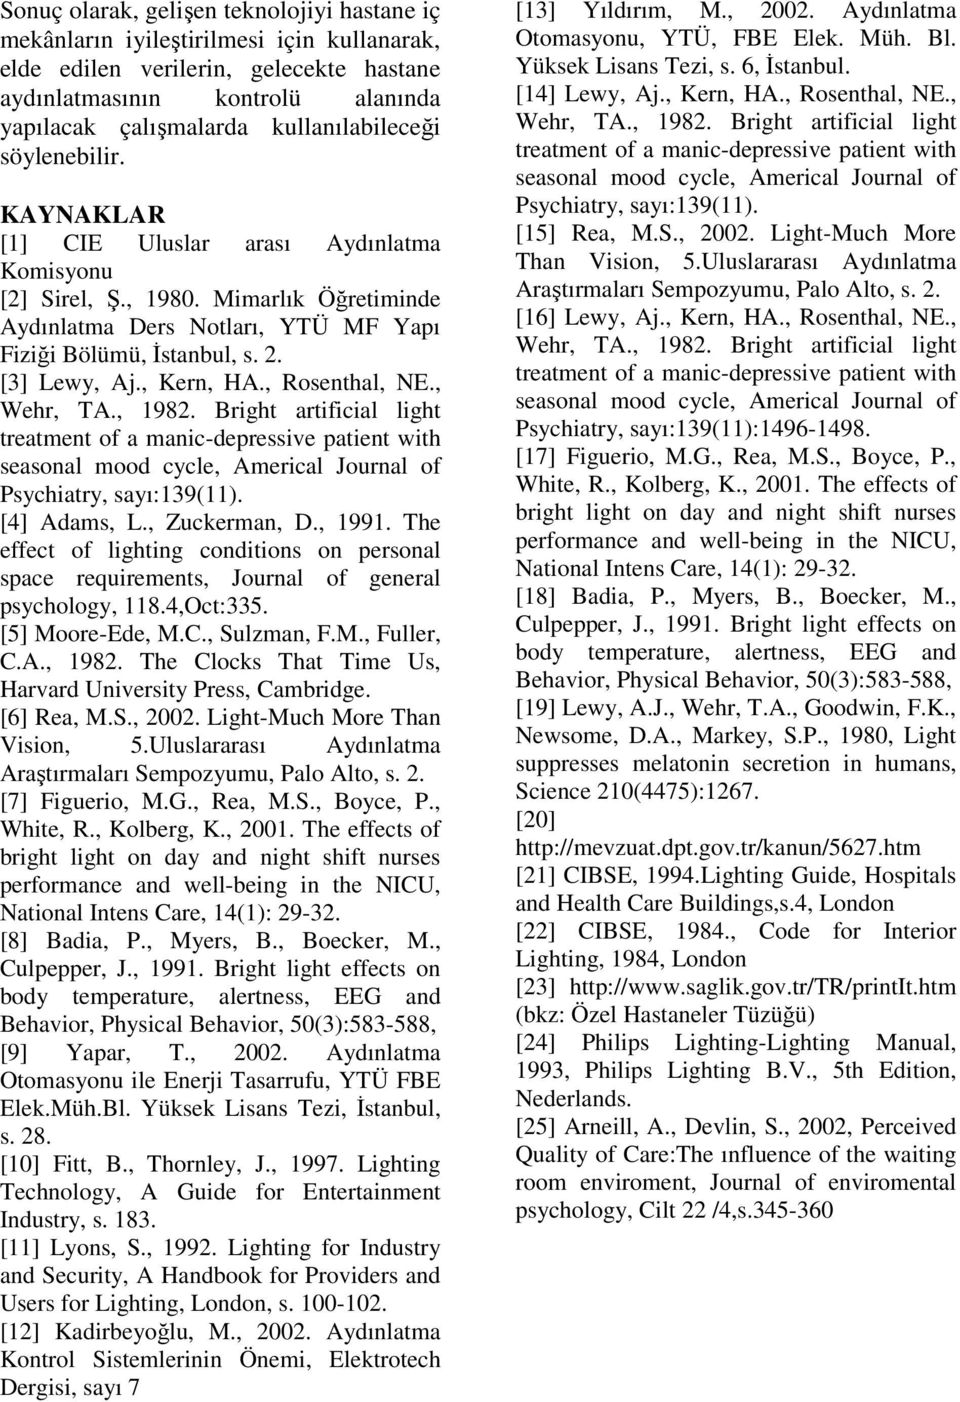 [3] Lewy, Aj., Kern, HA., Rosenthal, NE., Wehr, TA., 1982. Bright artificial light treatment of a manic-depressive patient with seasonal mood cycle, Americal Journal of Psychiatry, sayı:139(11).